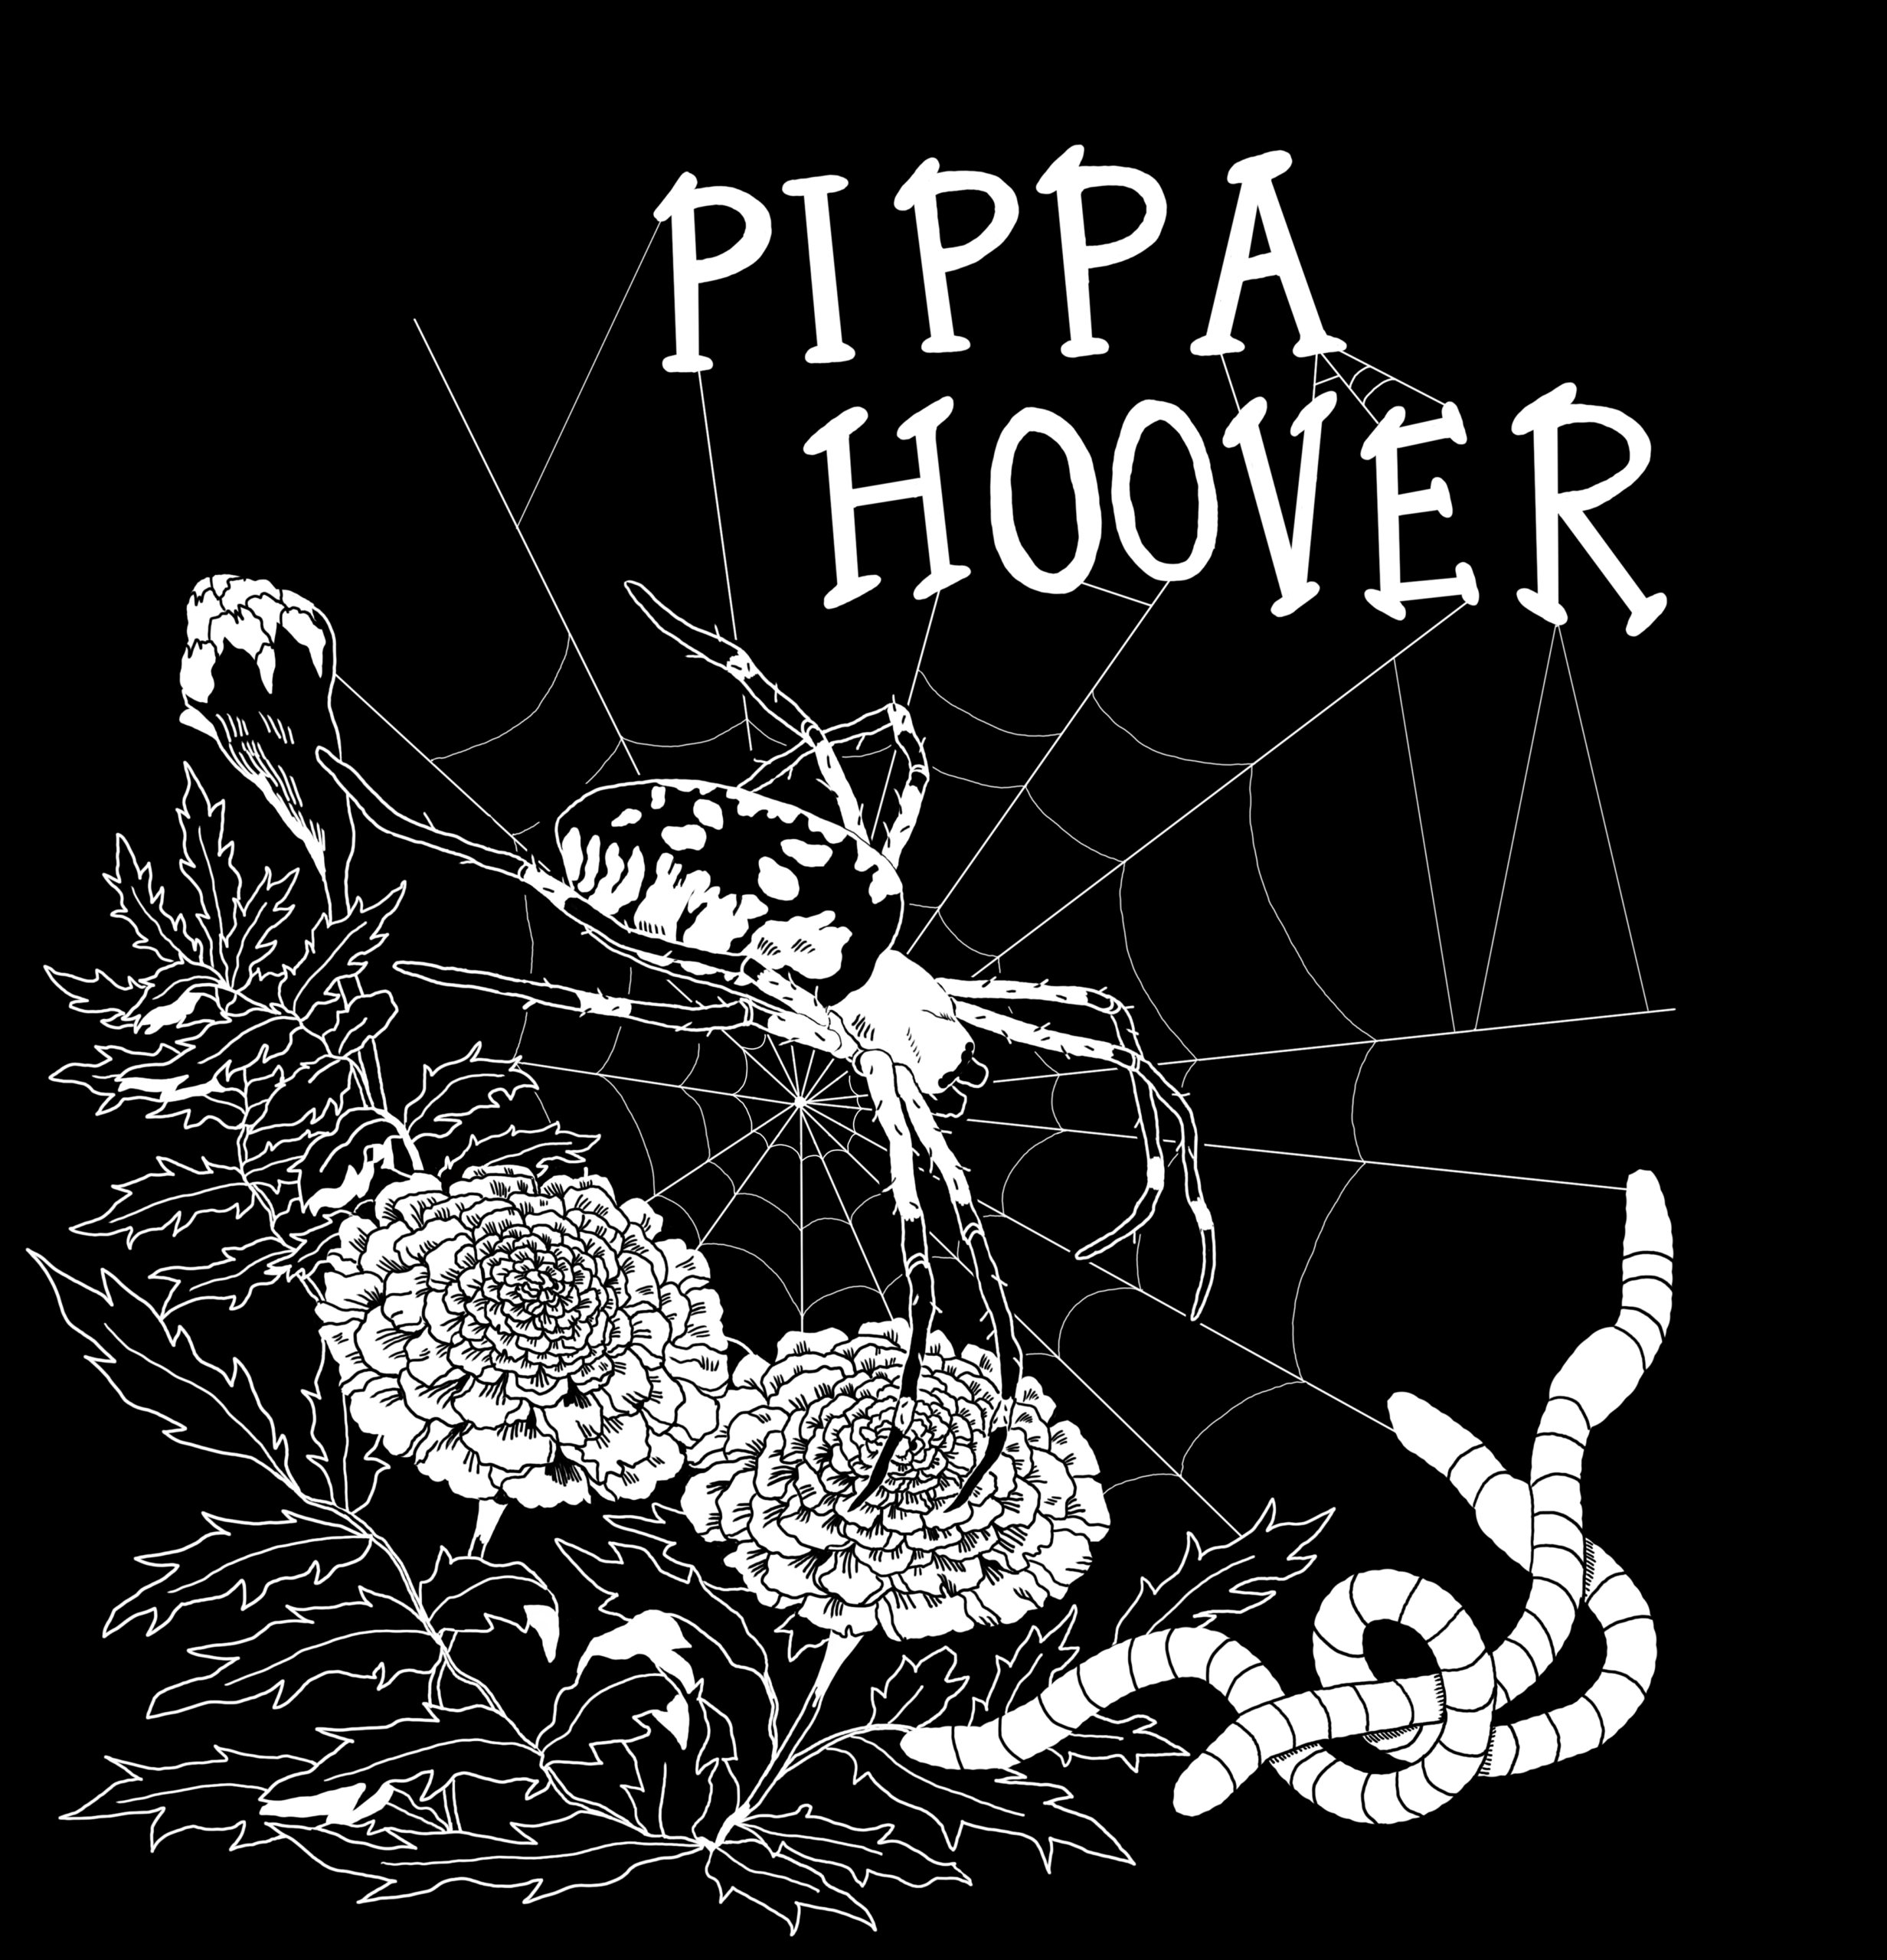 Pippa Hoover Garden Spider logo. <br>
Art by Laura Hamon. 